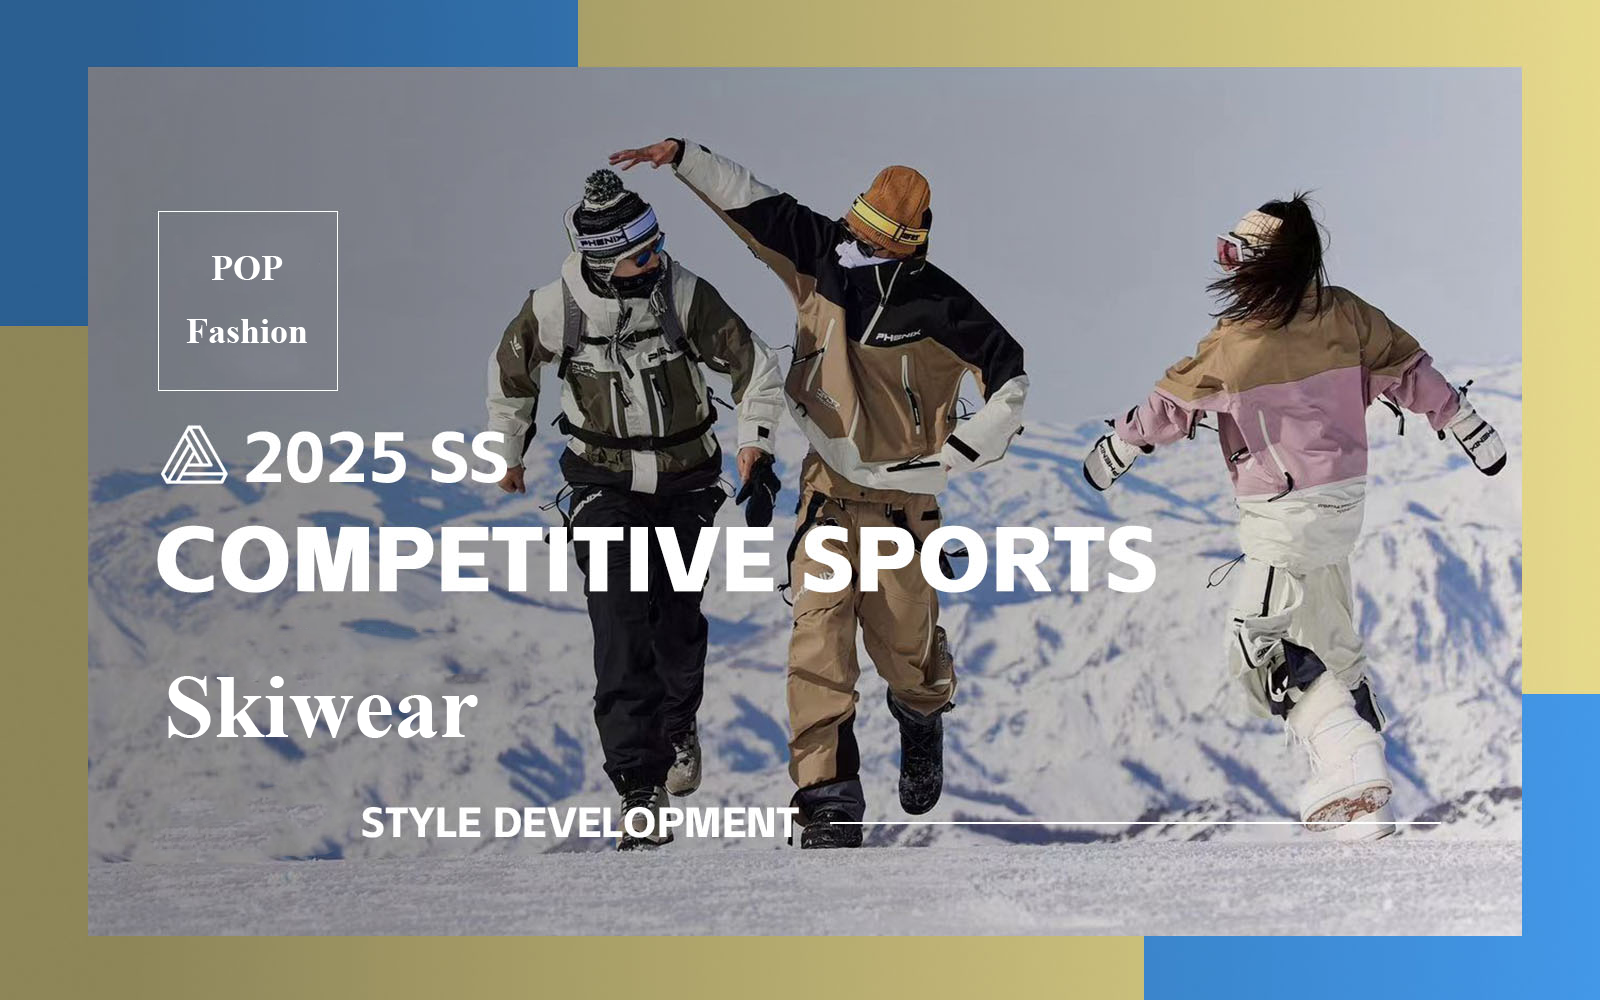 Competitive Sports -- The Design Development of Skiwear